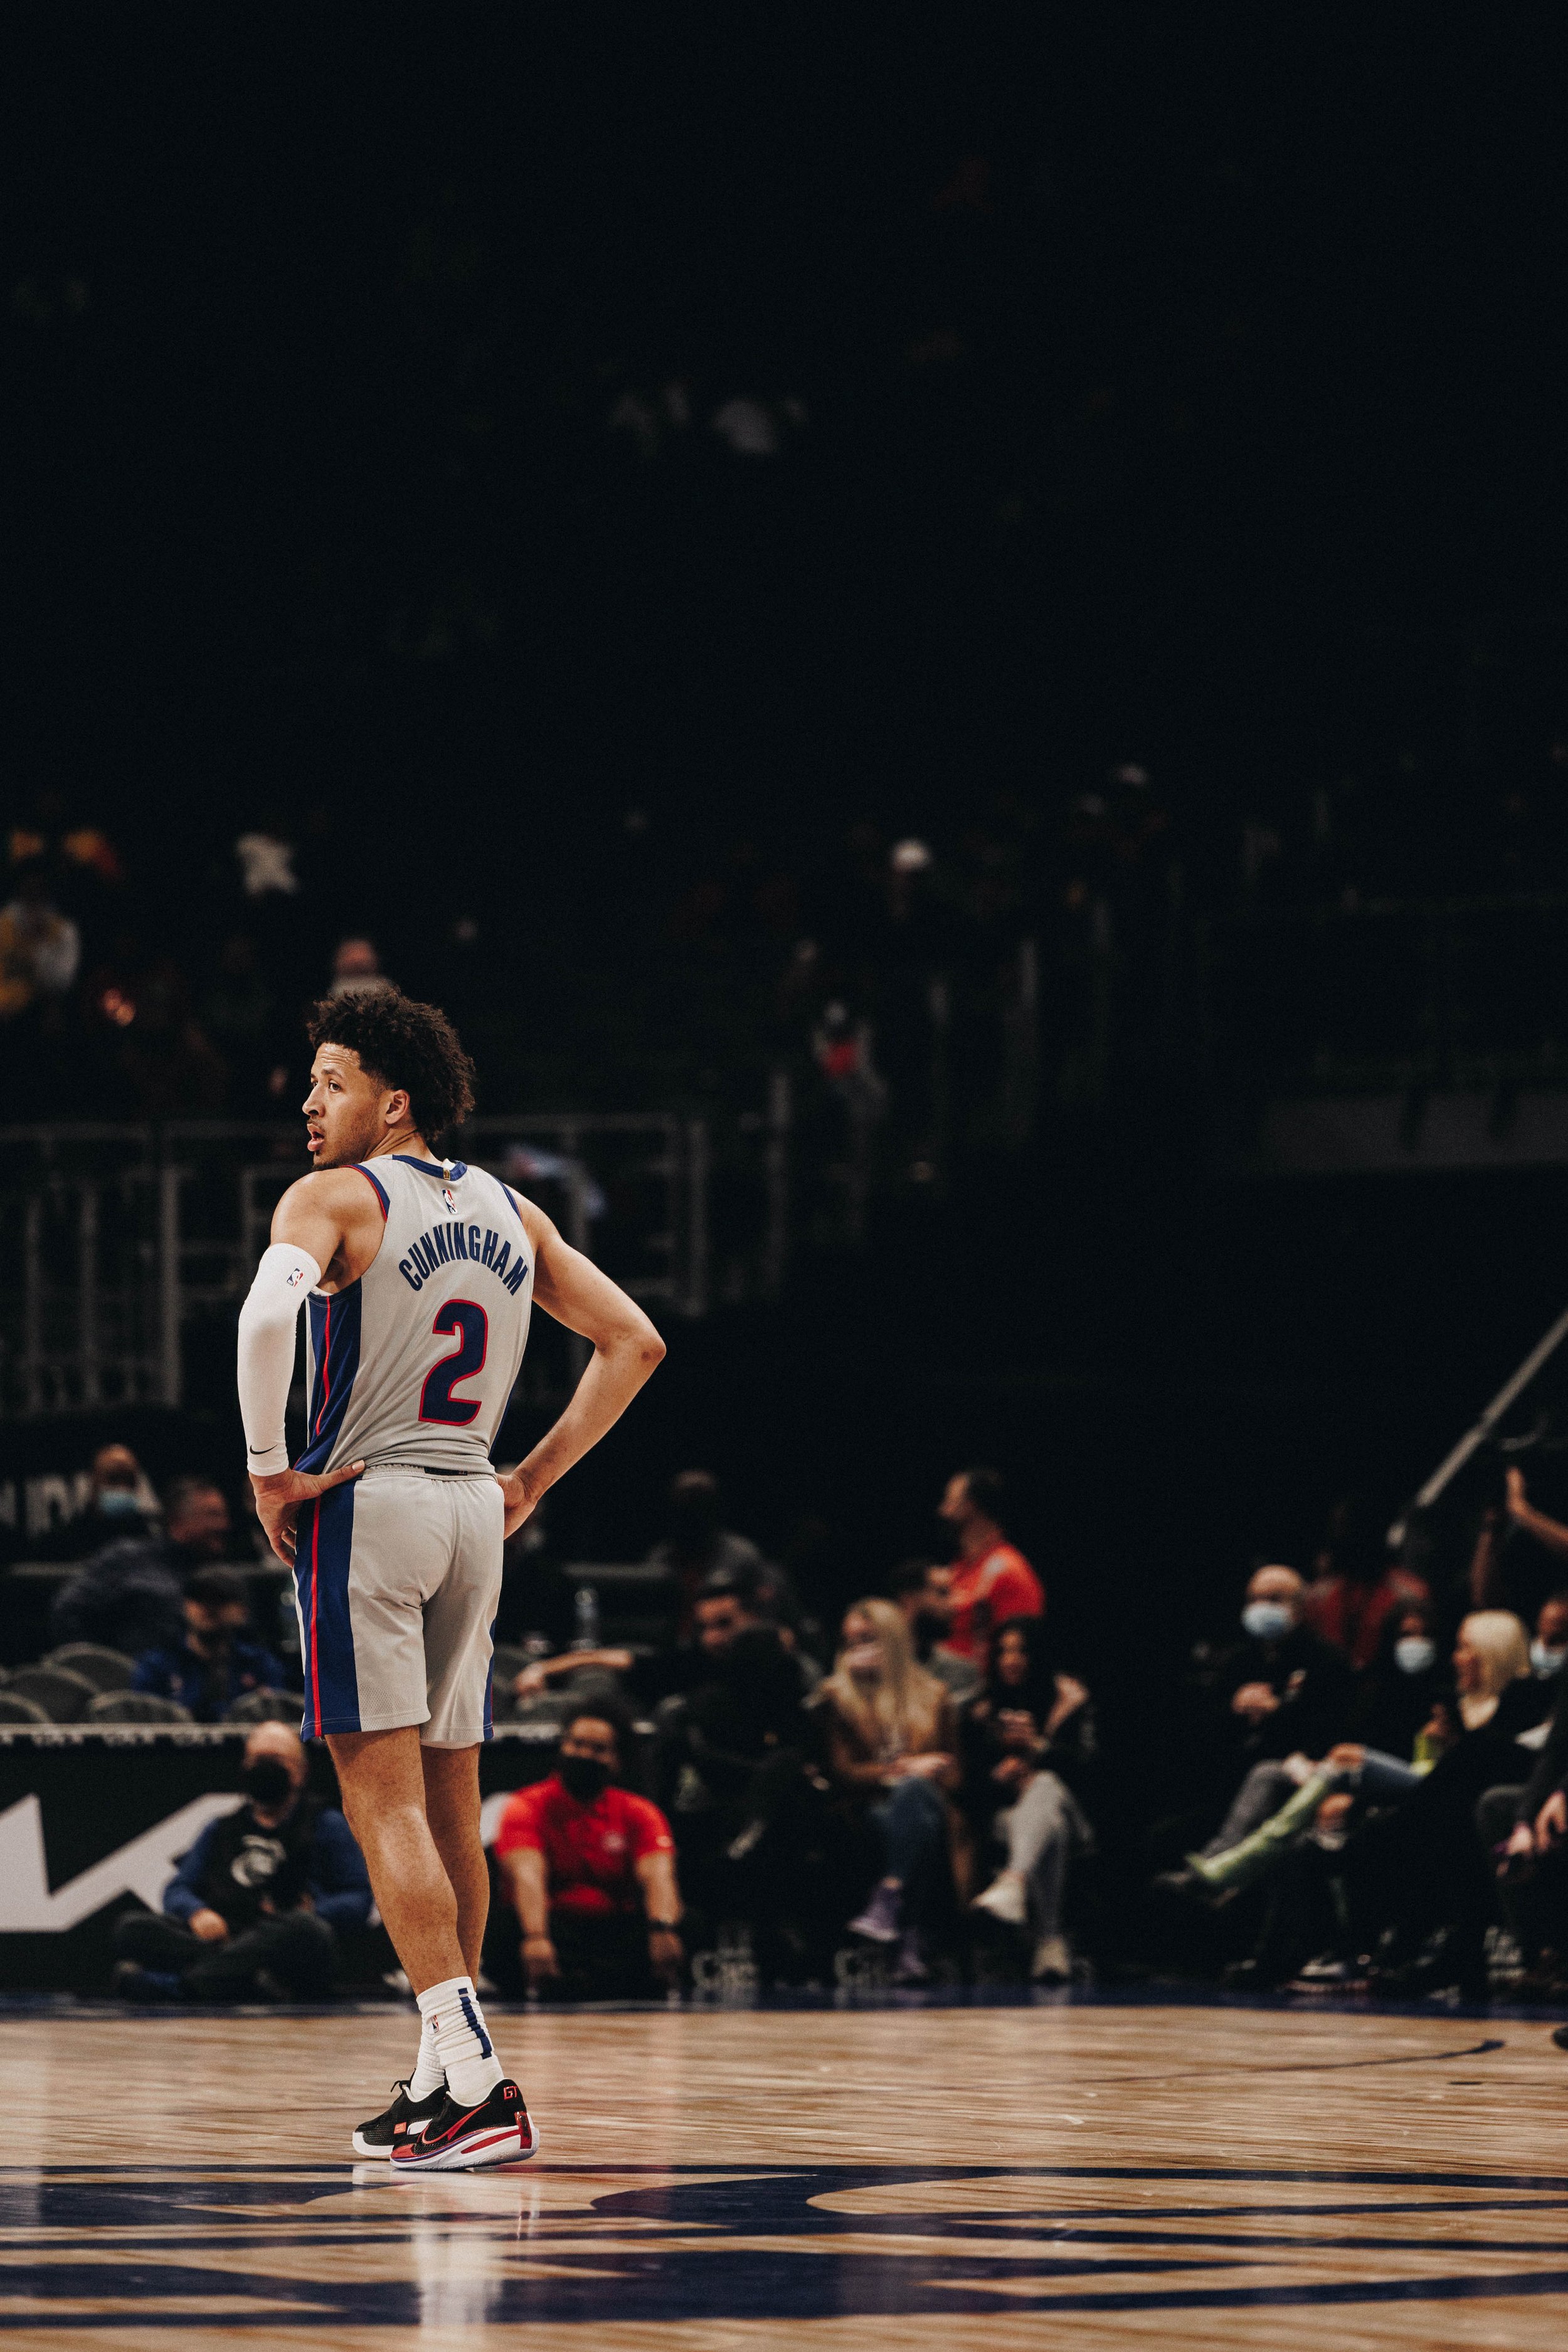 Jaden Ivey goes No. 5 to Detroit Pistons in 2022 NBA draft